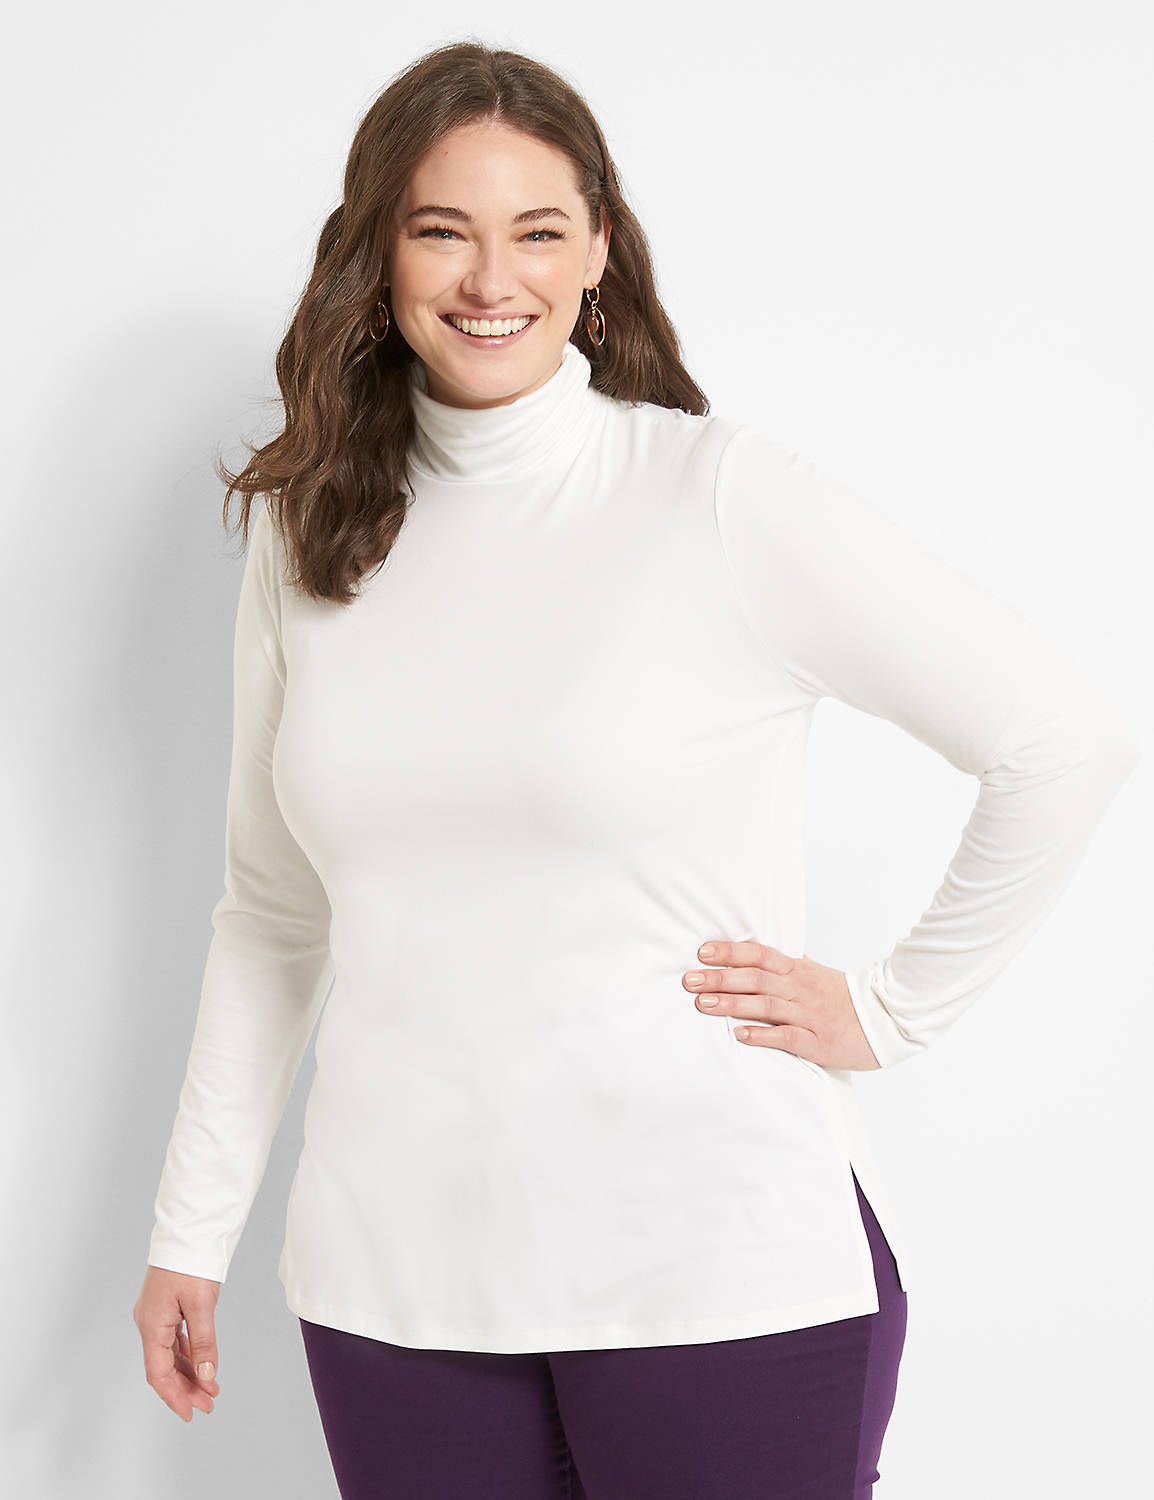 S-3X Women's Basic Mock Neck Long Sleeve Top Curved Hem Soft Knit T-Shirt Tunic